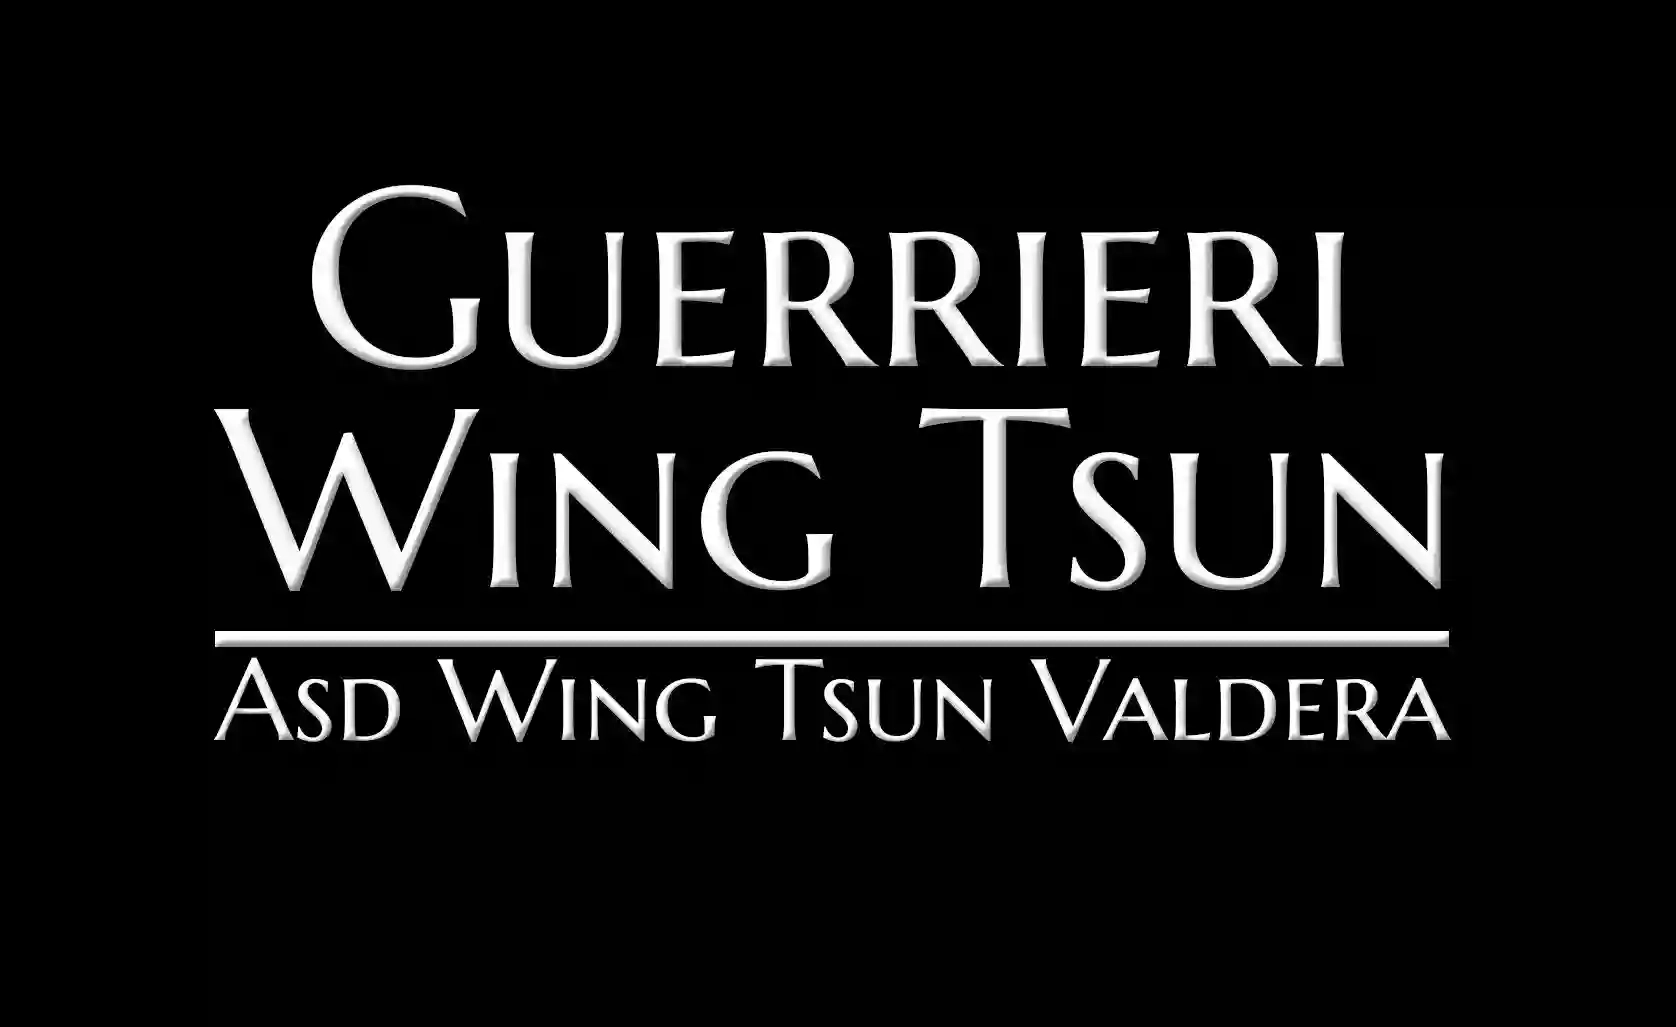 Wing Tsun Firenze a.s.d. - Nuova Sede Unica